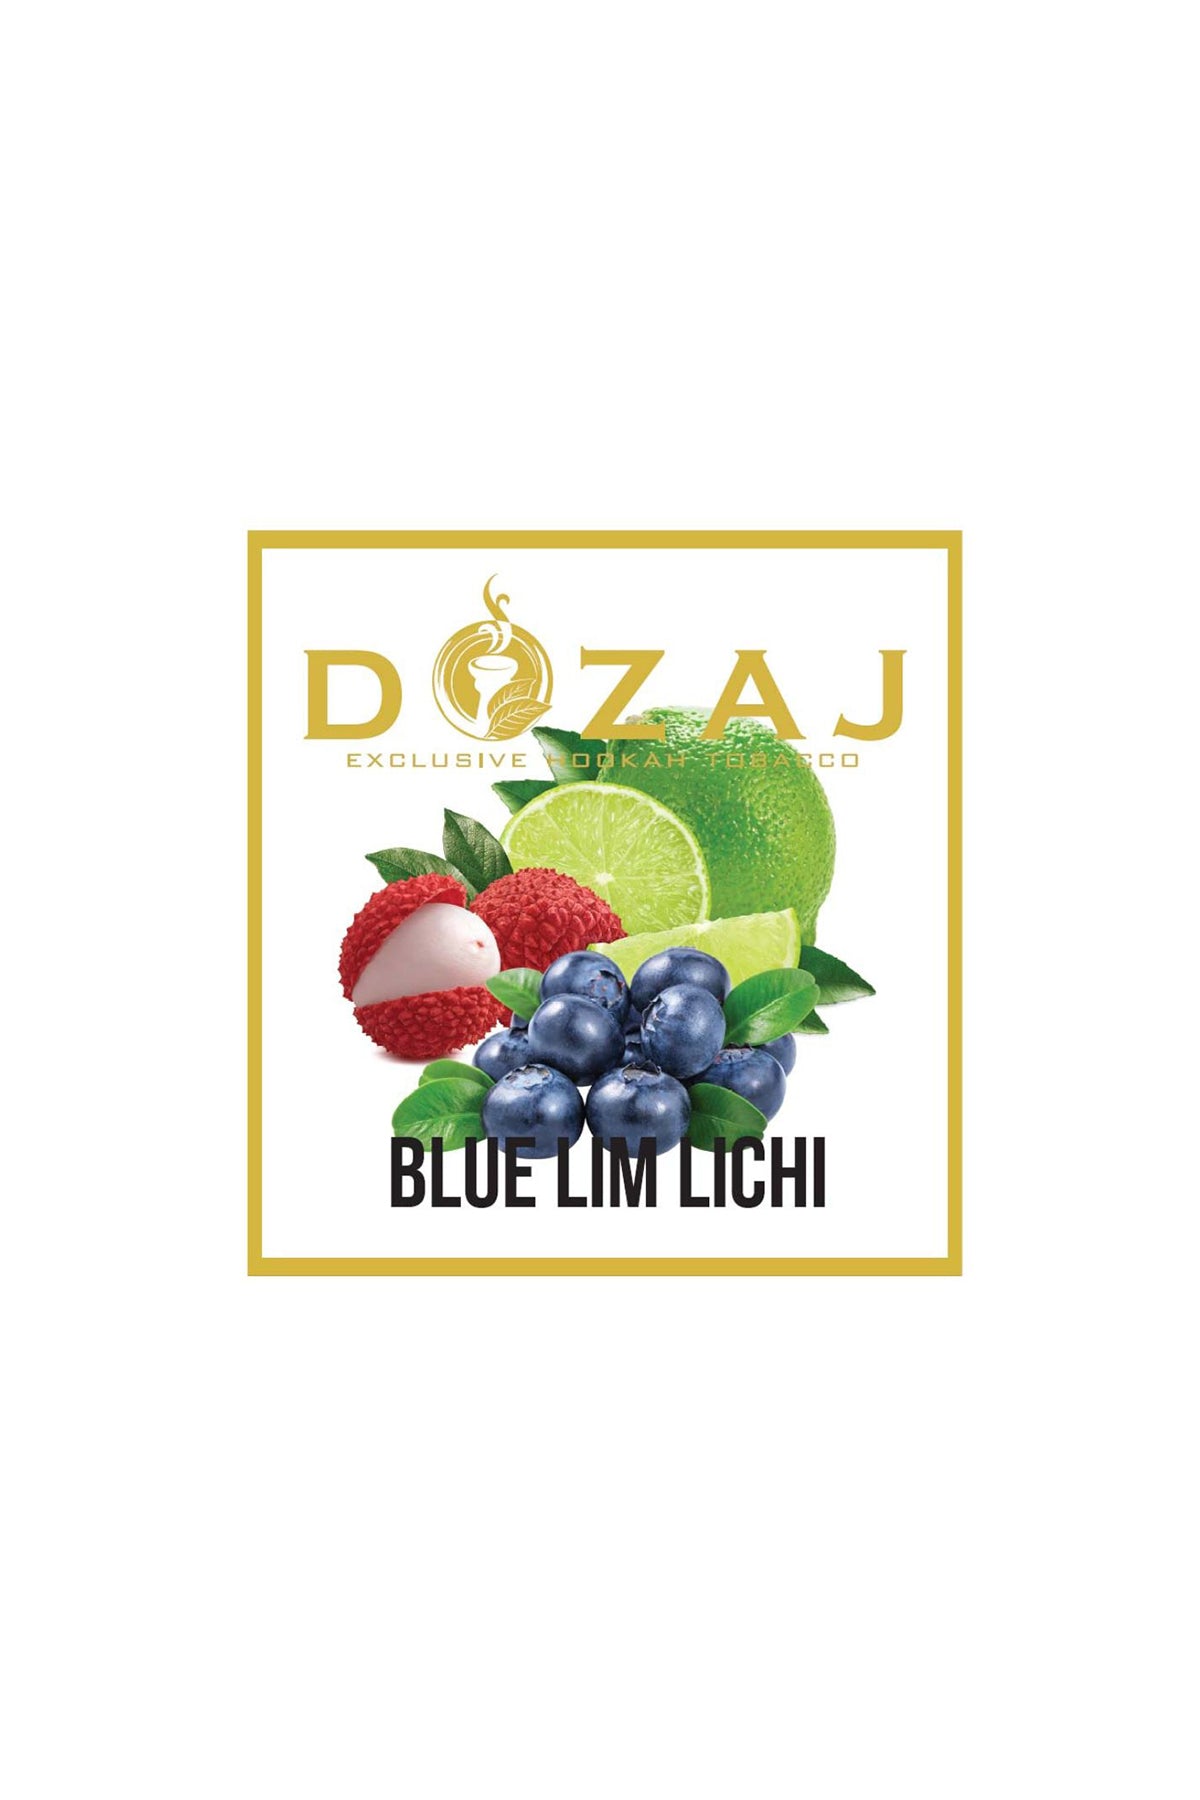 Tabák - Dozaj Gold 200g - Blue Lim Lichi